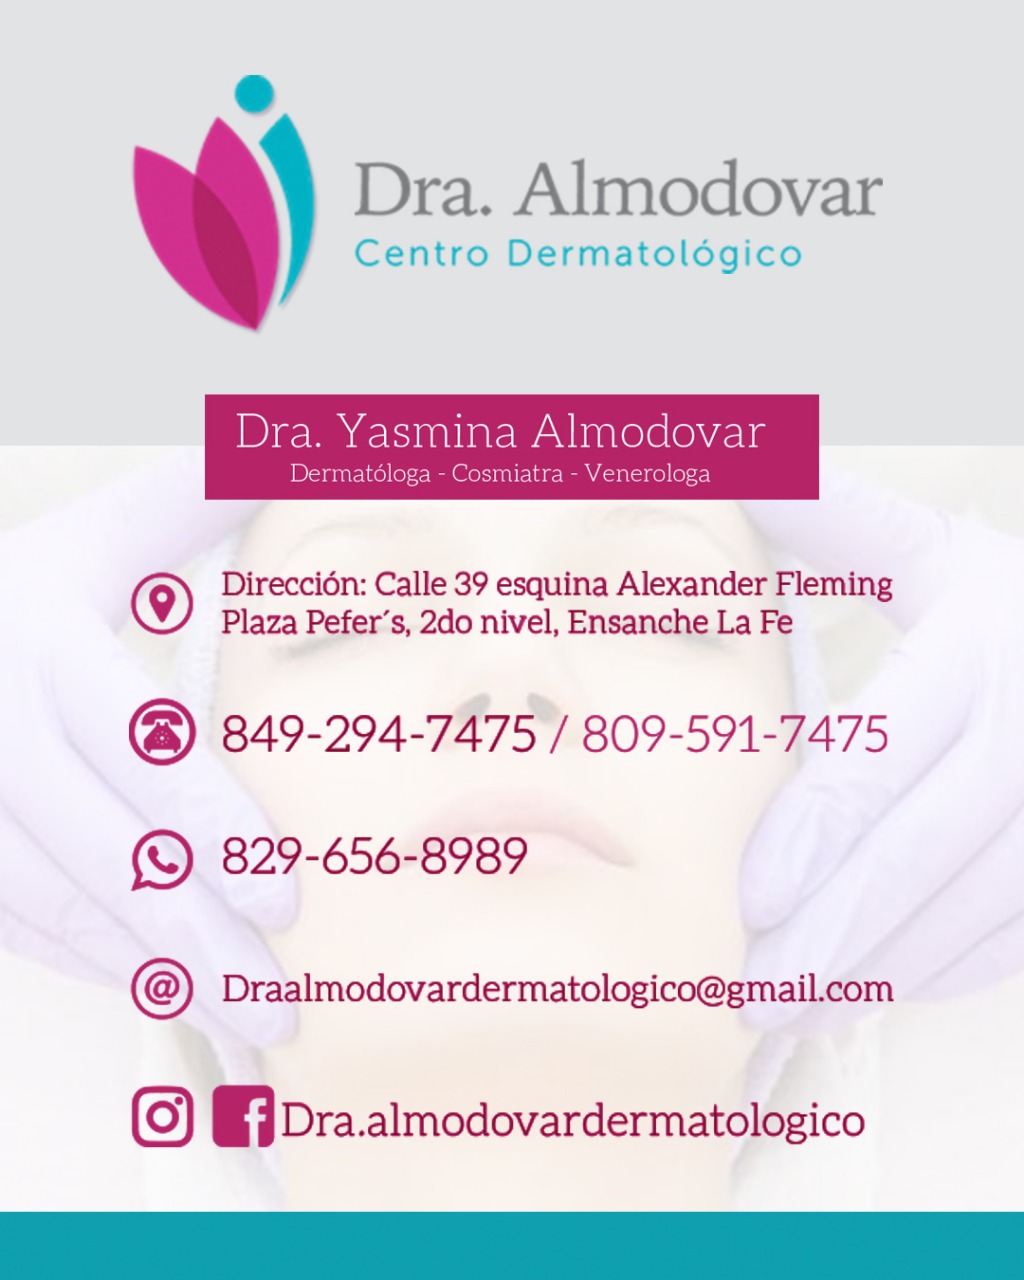 Dra. Almodovar, Centro Dermatológico